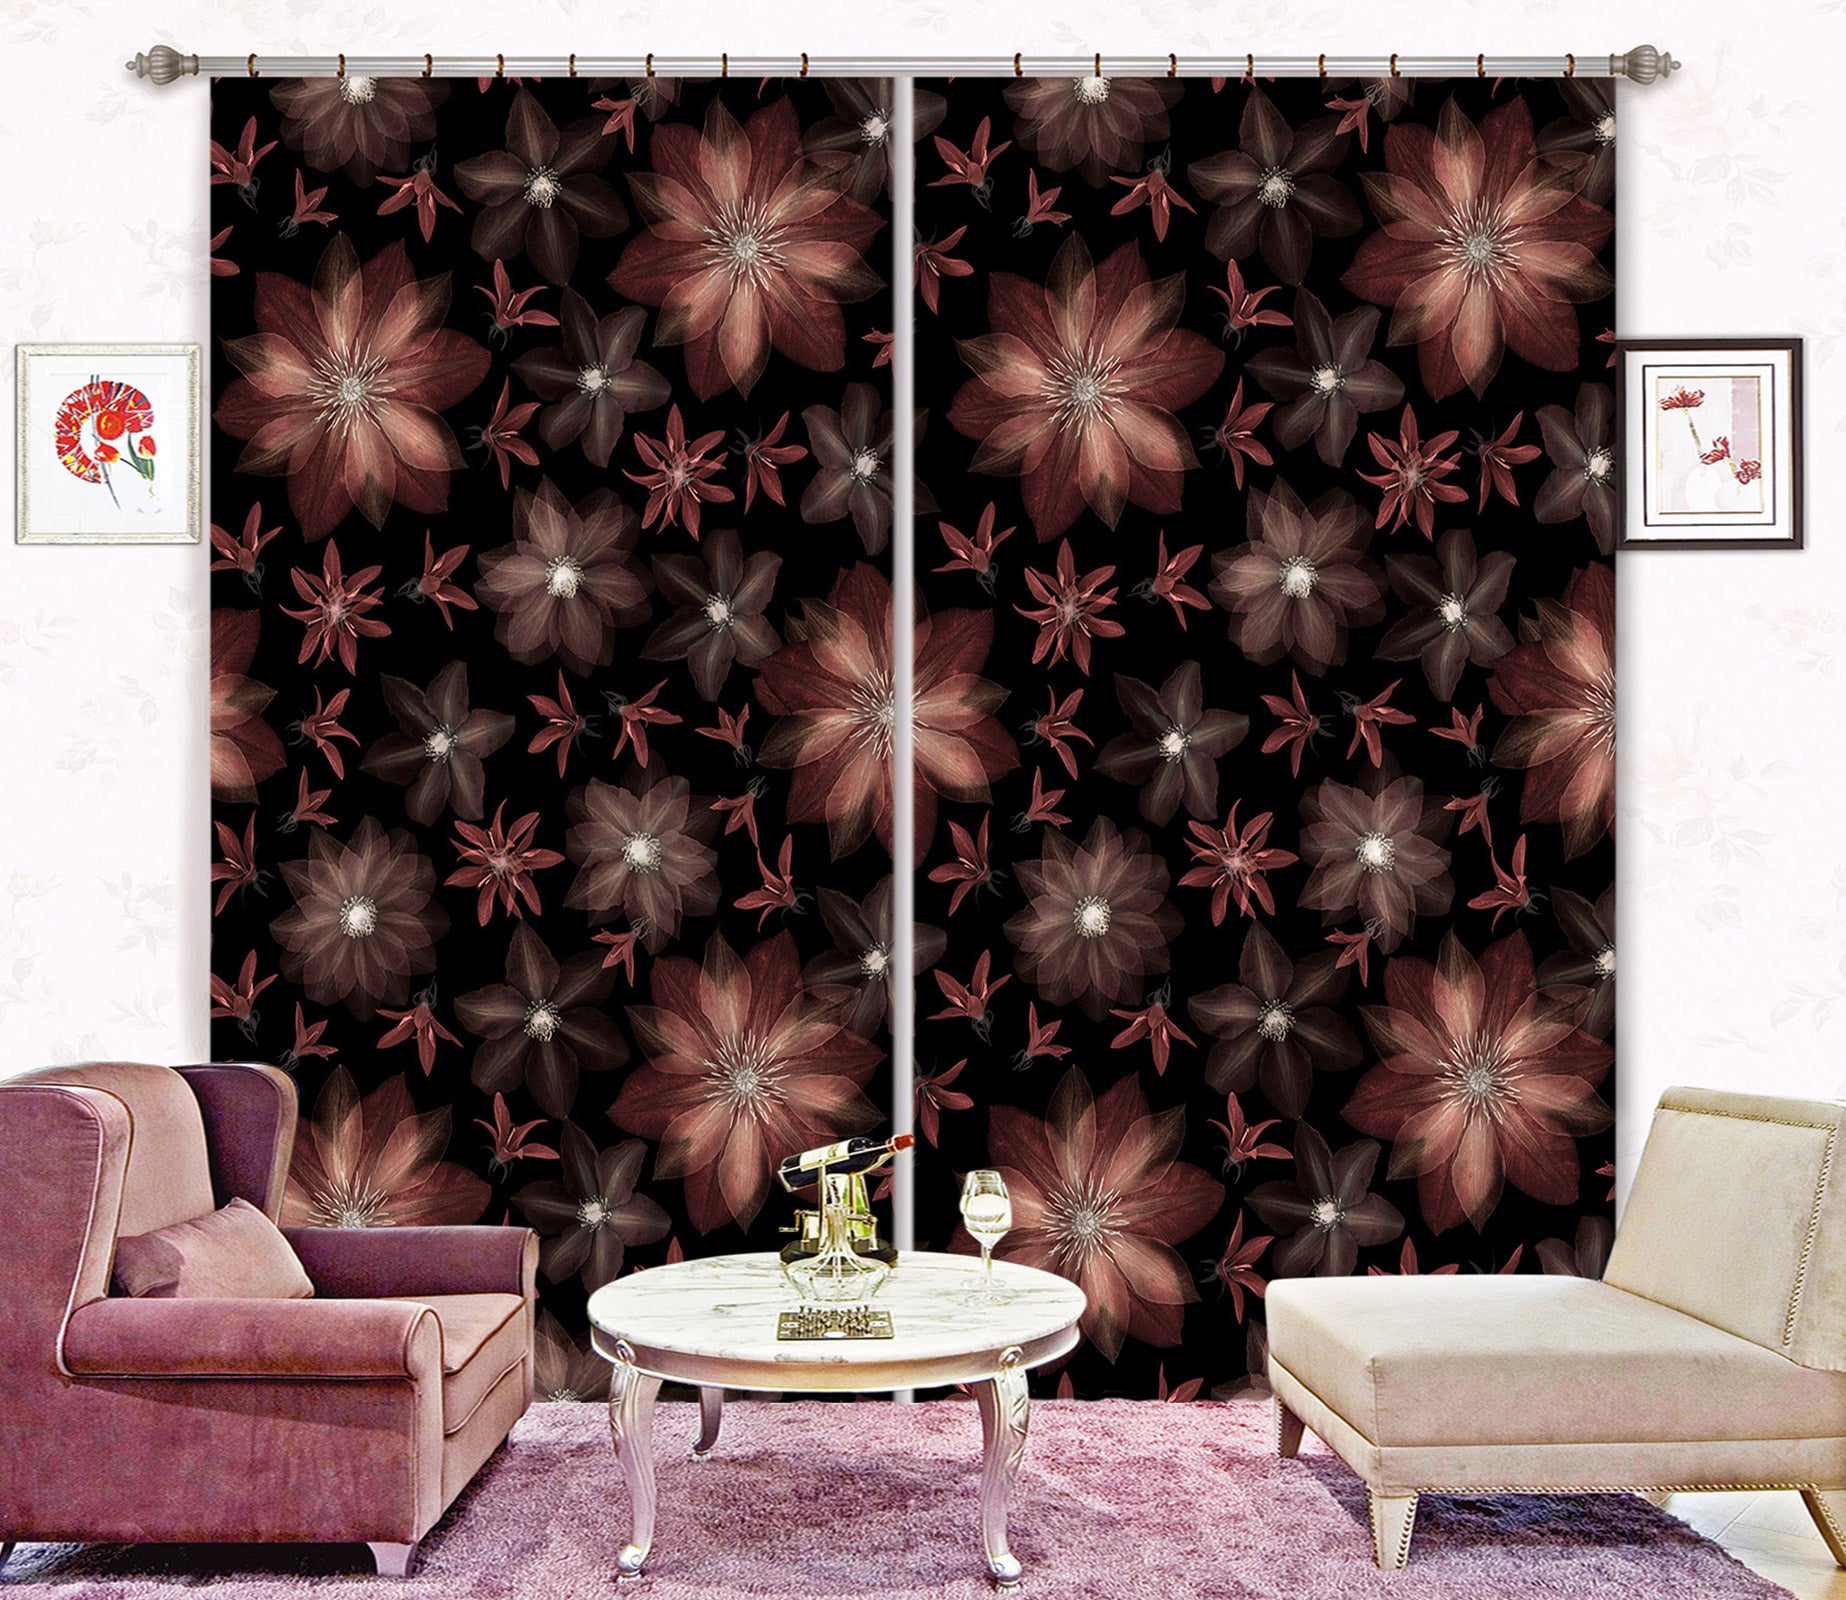 3D Red Flower 100 Assaf Frank Curtain Curtains Drapes